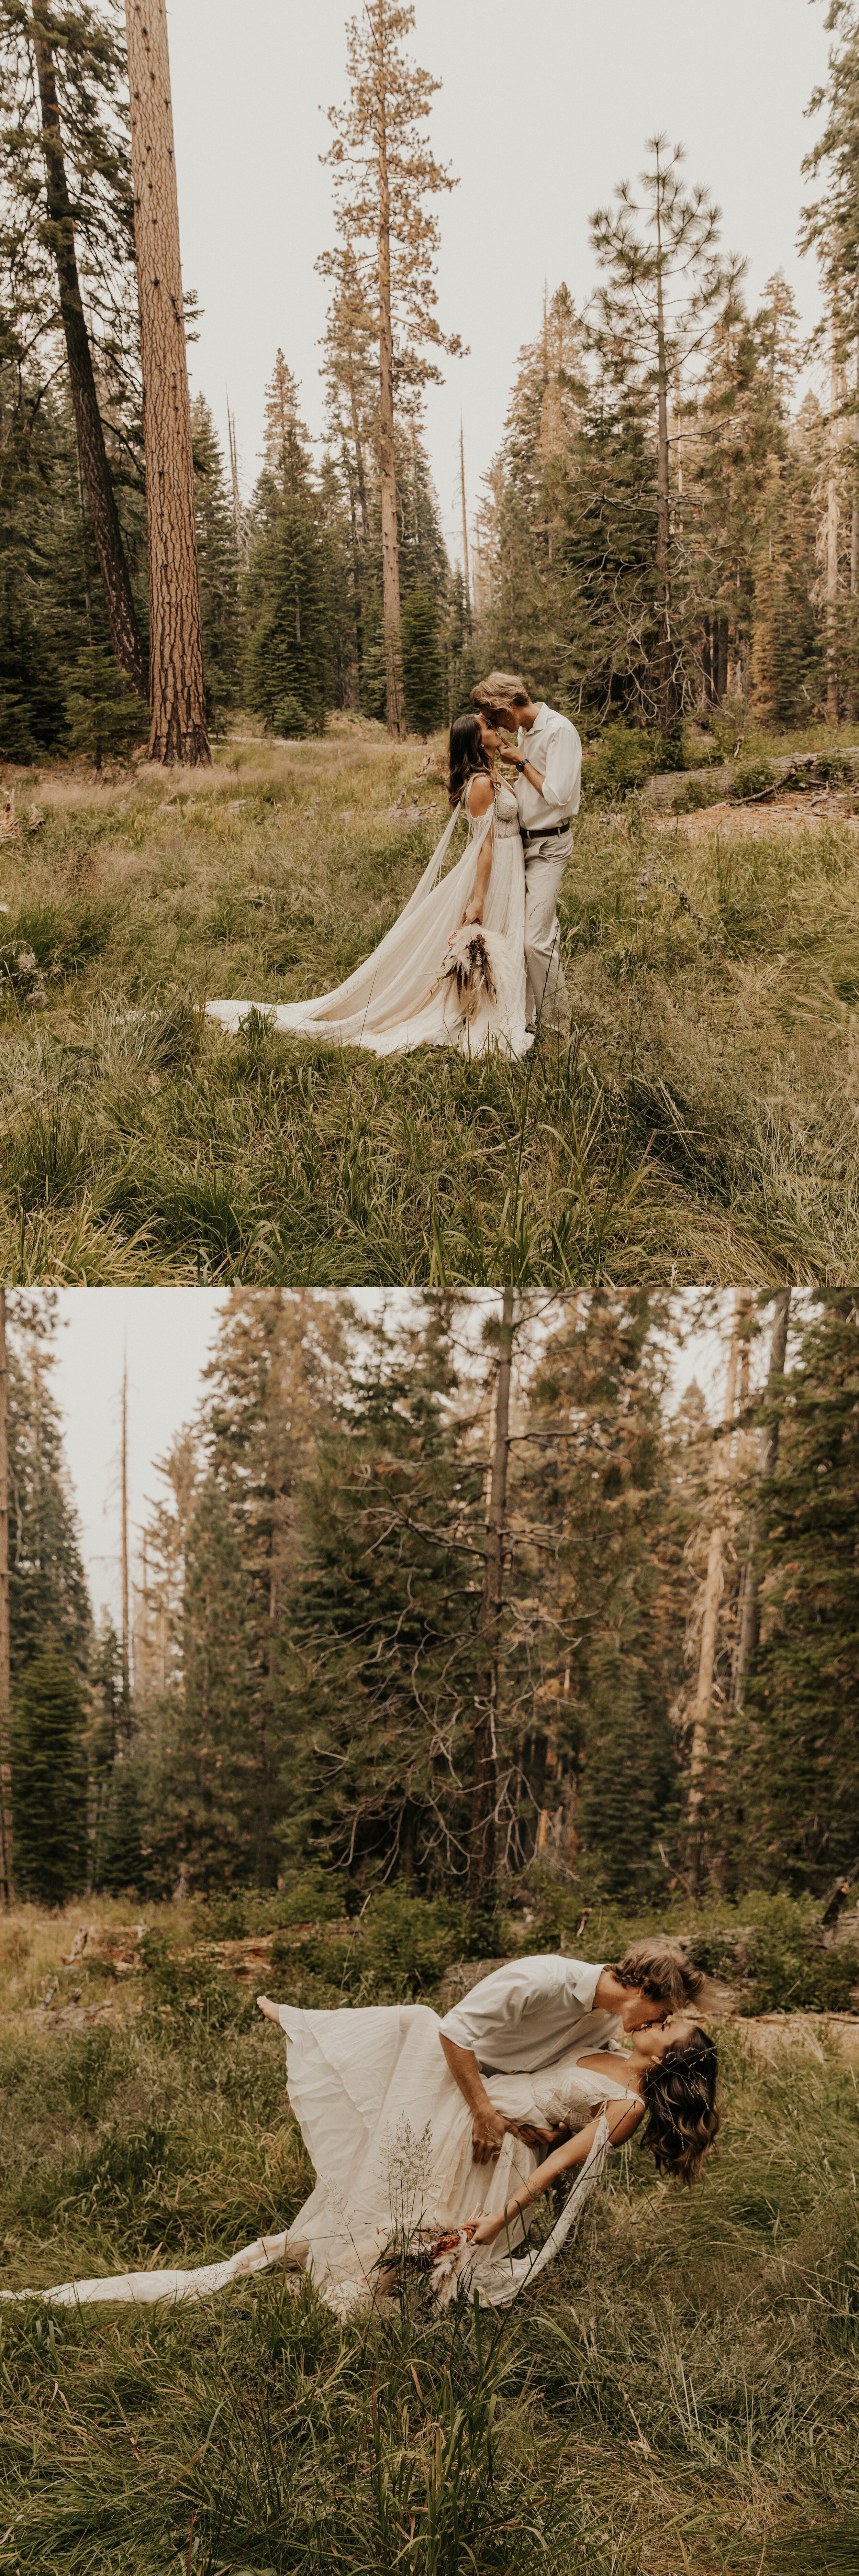 jessika-christine-photography-yosemite-couples-outdoor-adventurous-session (1).jpg